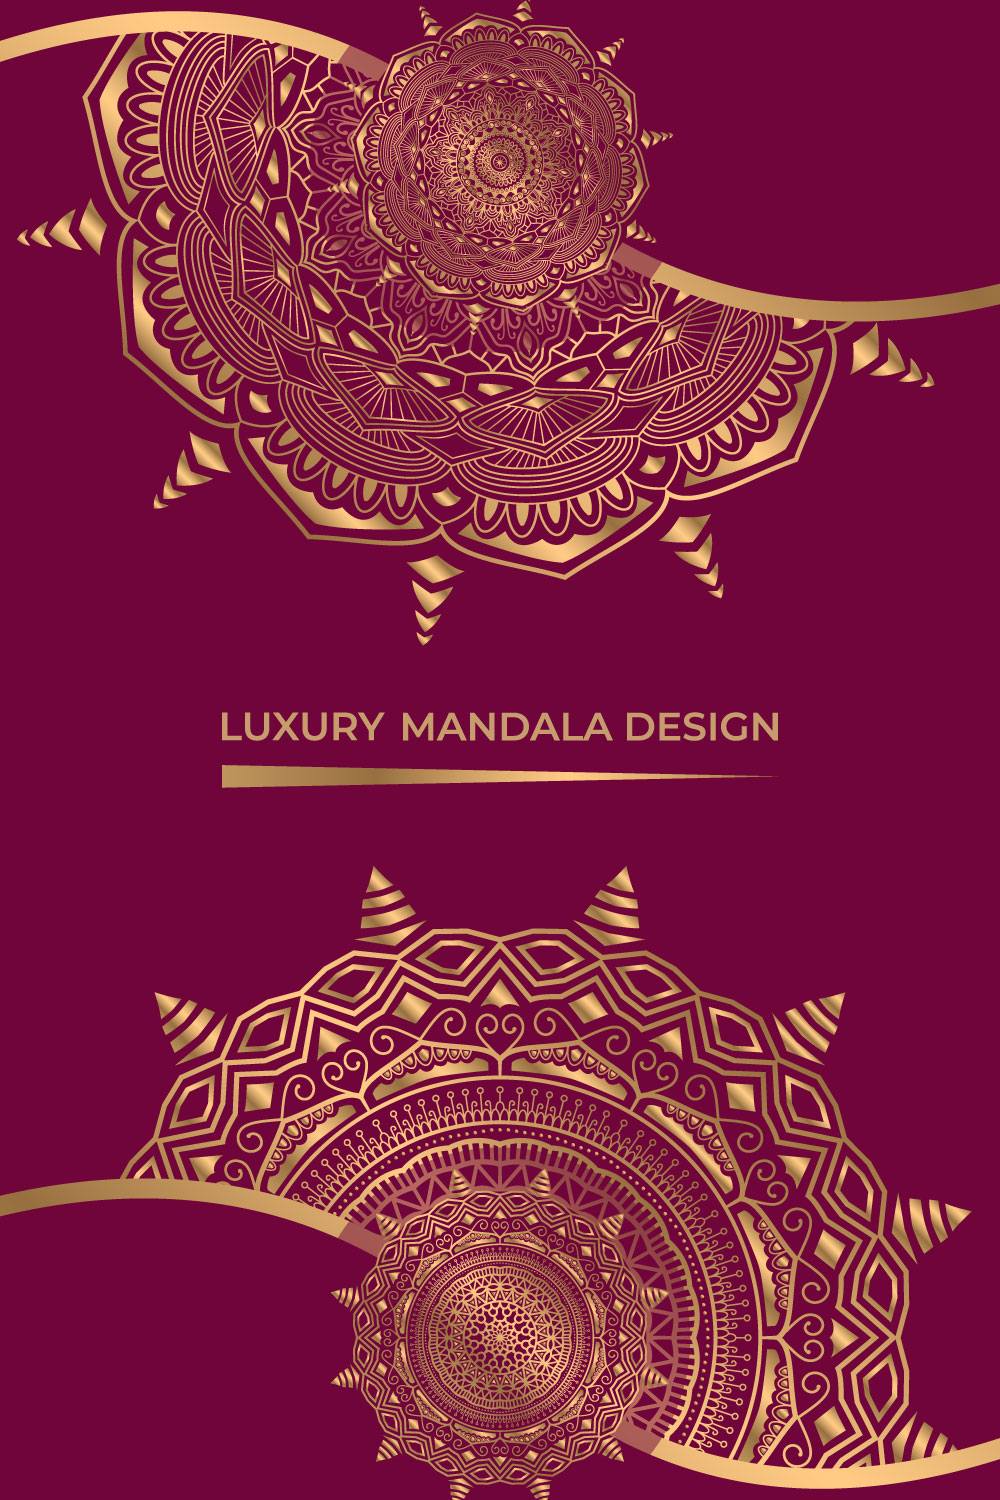 Luxury Mandala design pinterest preview image.